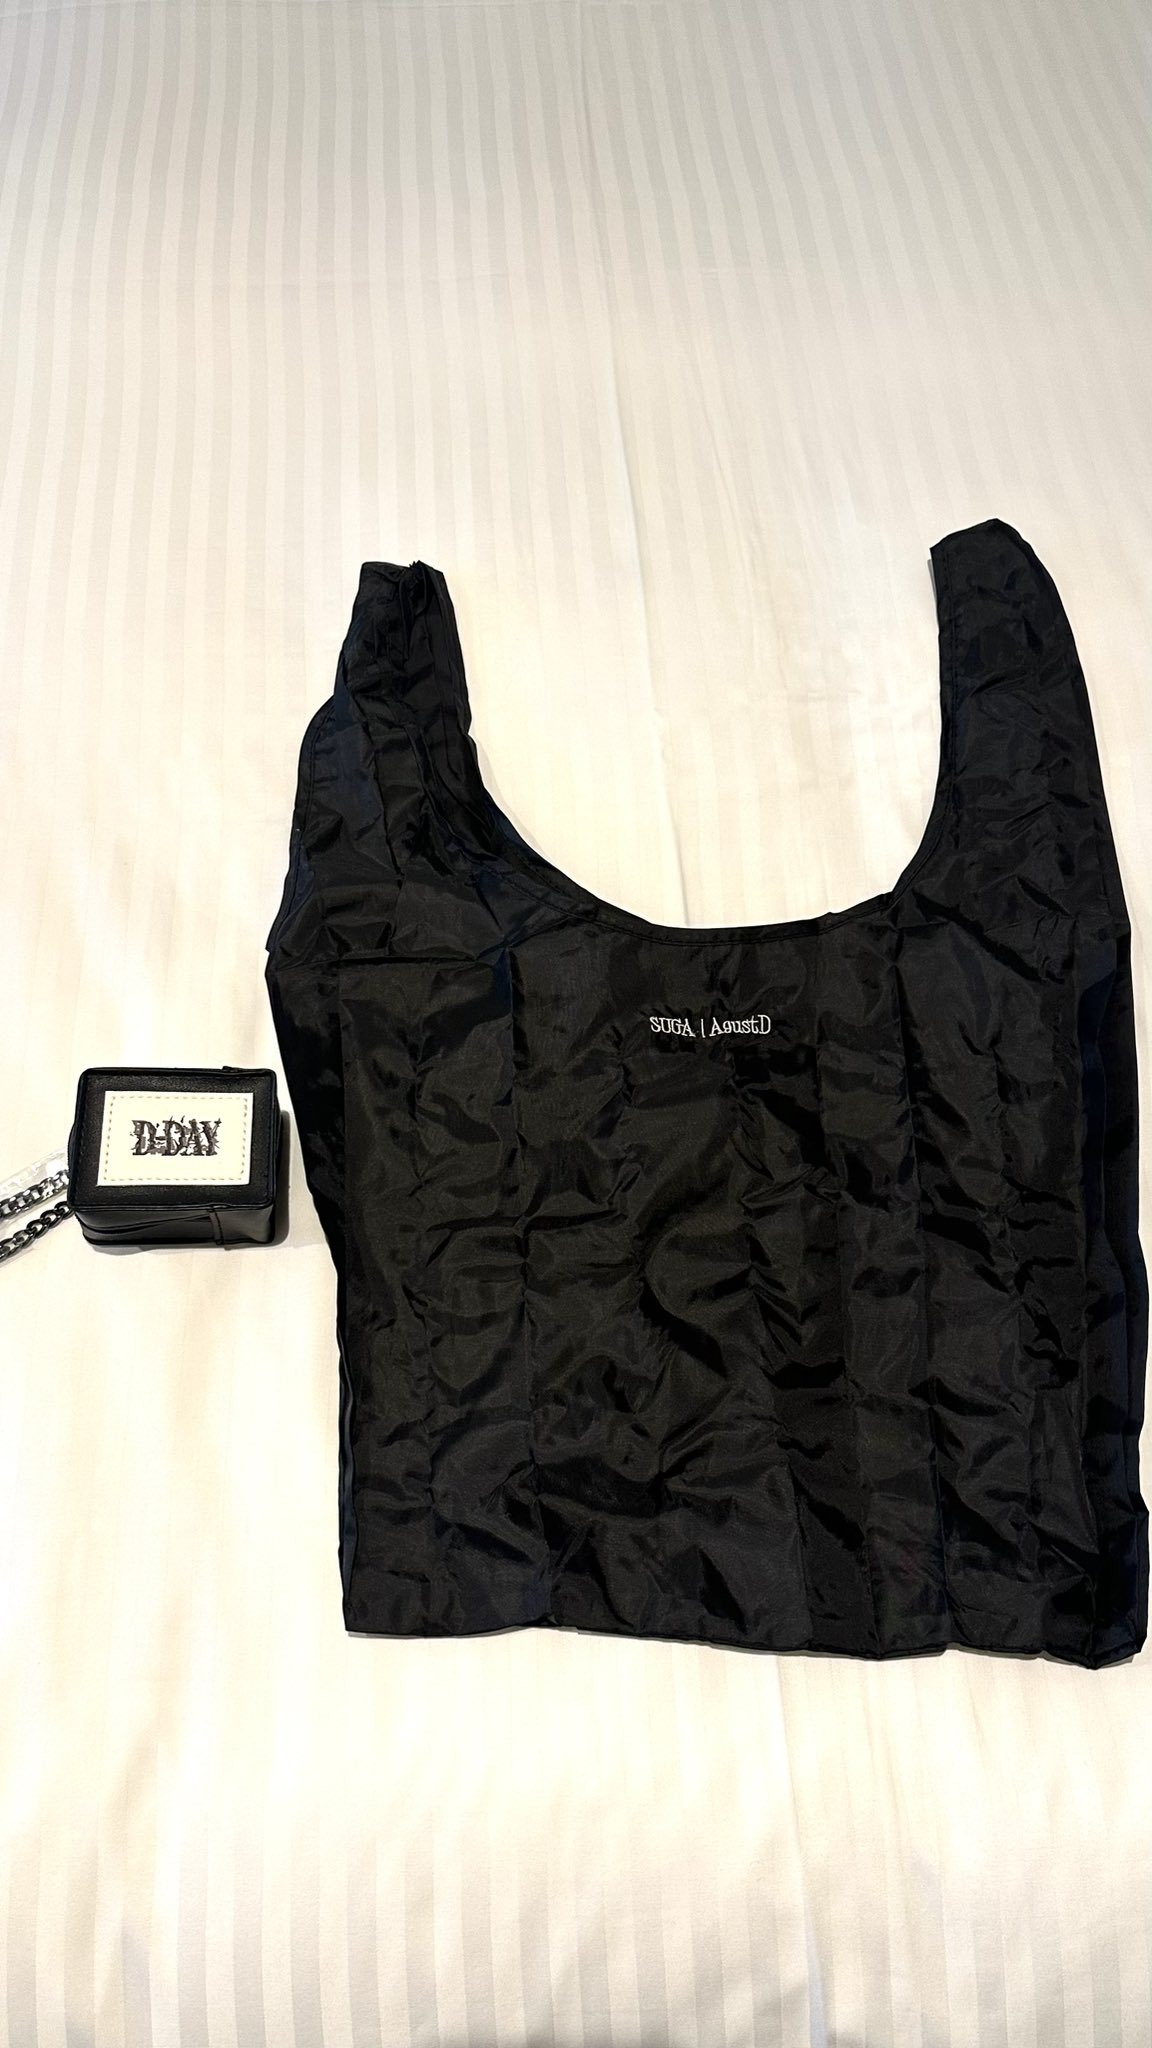 BTS SUGA Agust D Tour D-Day Marche Bag Japan Limited Item New Eco Bag